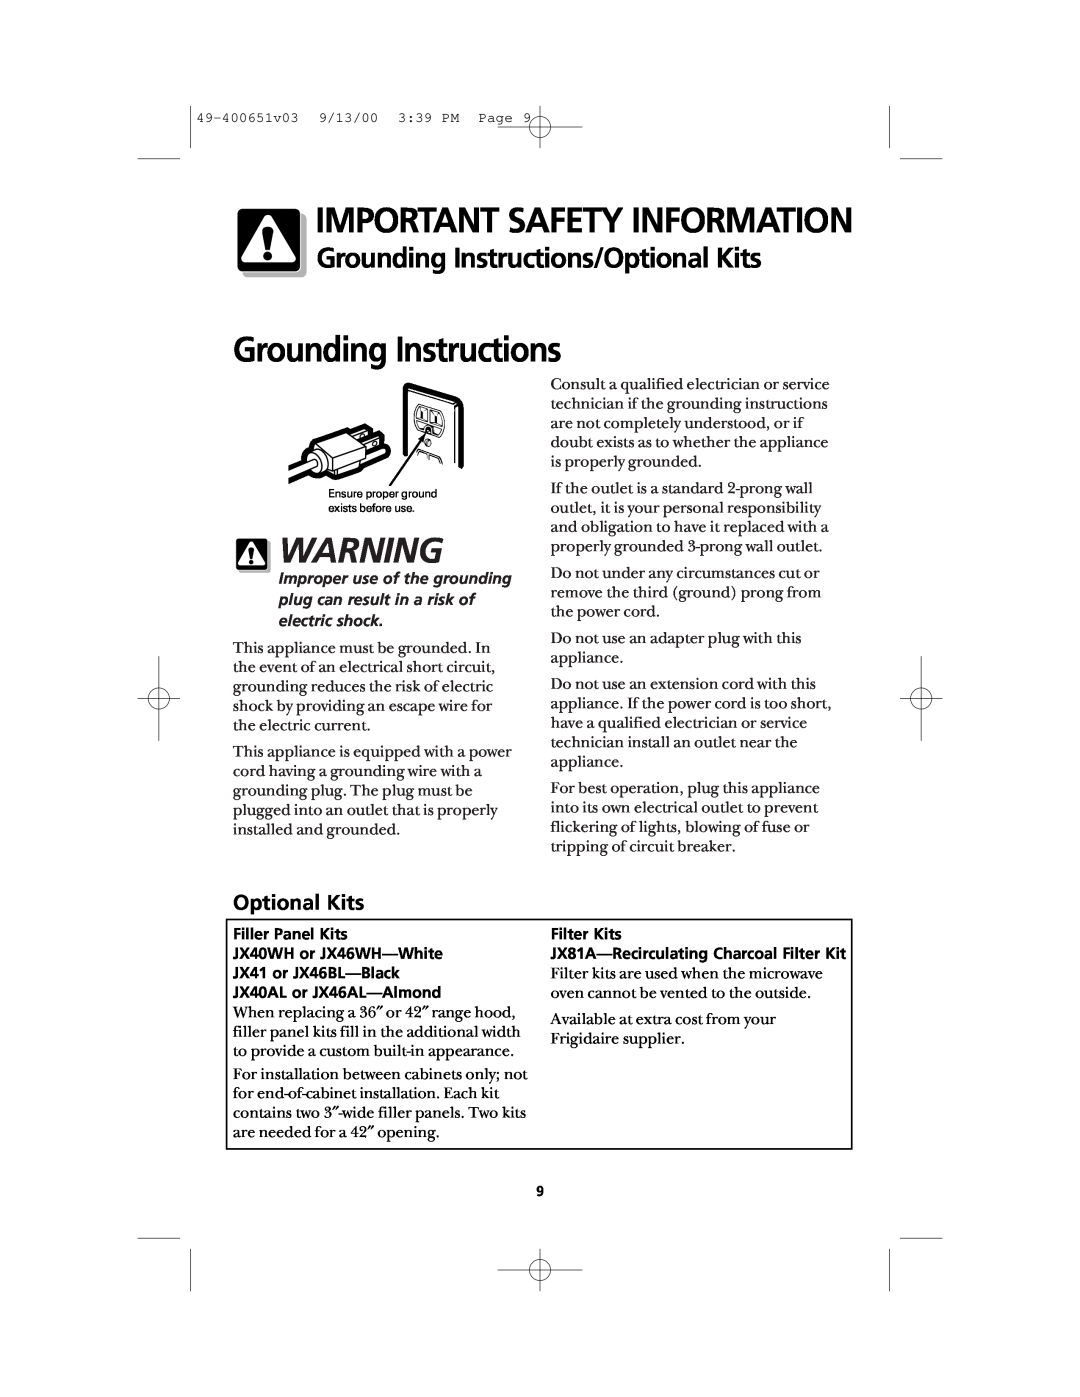 Frigidaire FMT148 warranty Grounding Instructions/Optional Kits, Important Safety Information, JX40AL or JX46AL-Almond 